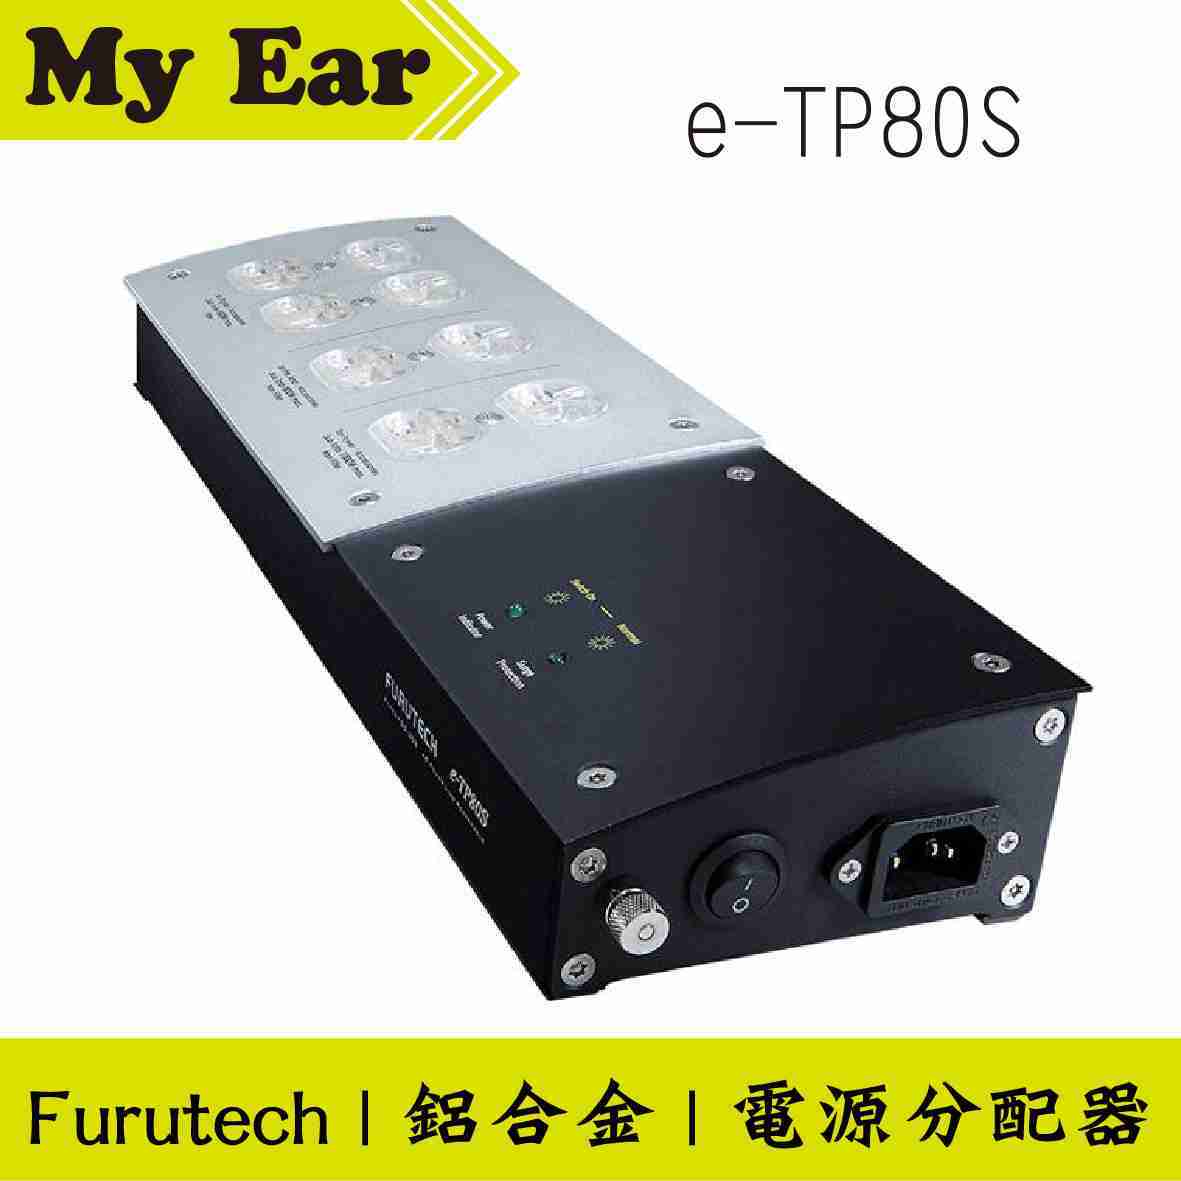 Furutech 古河 e-TP80S 排插 鋁合金 電源分配器 電源濾波器 | My Ear 耳機專門店